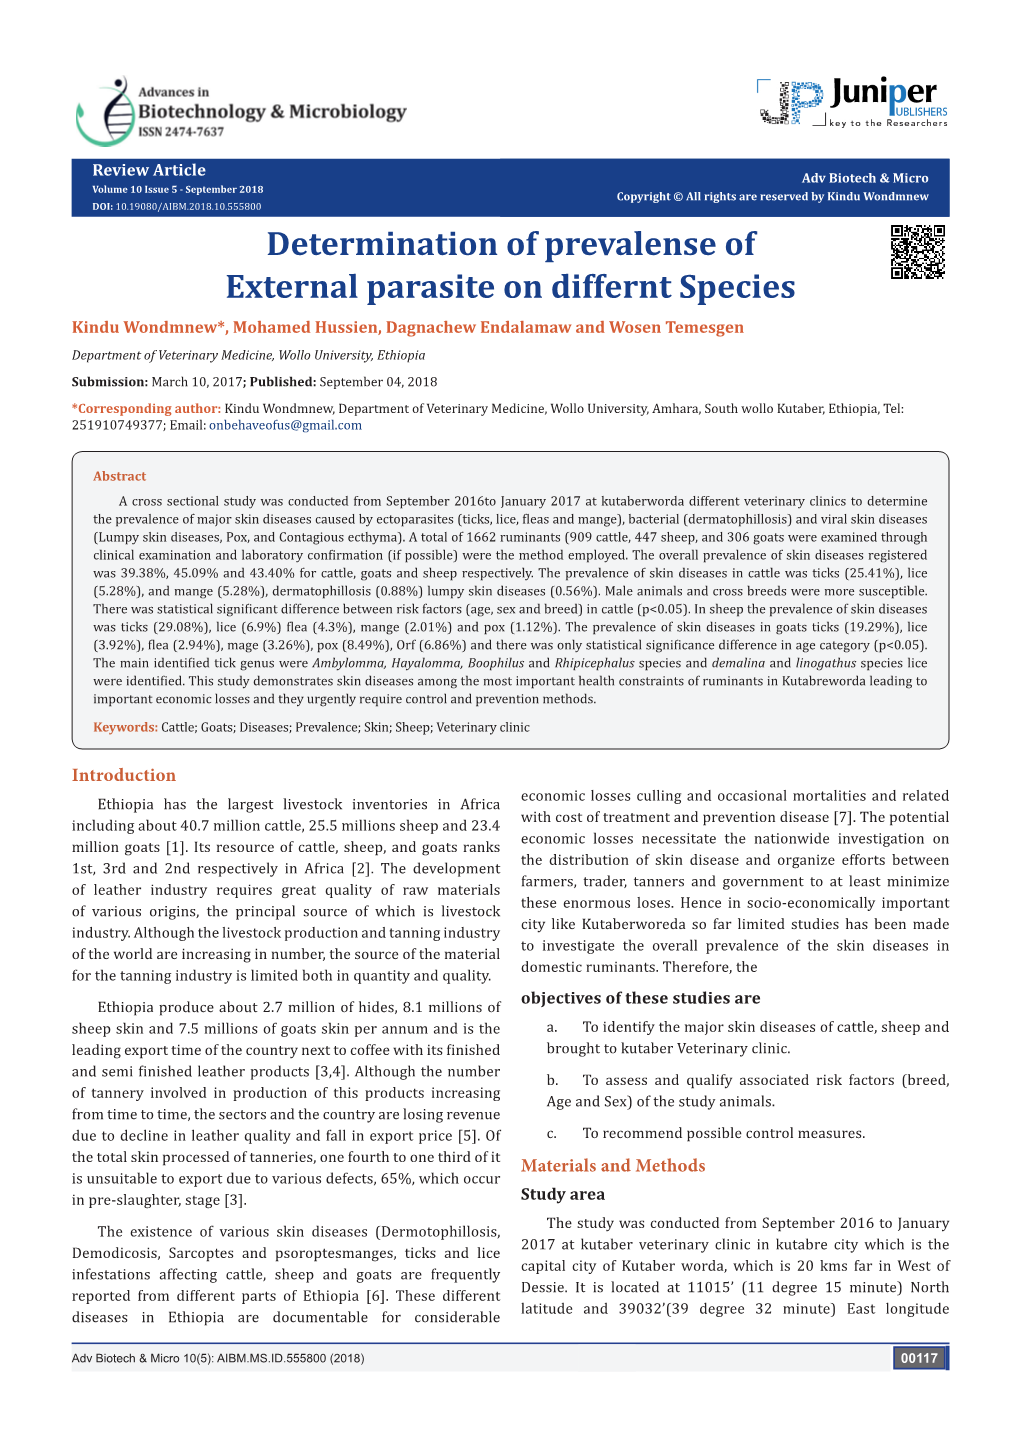 Determination of Prevalense of External Parasite on Differnt Species